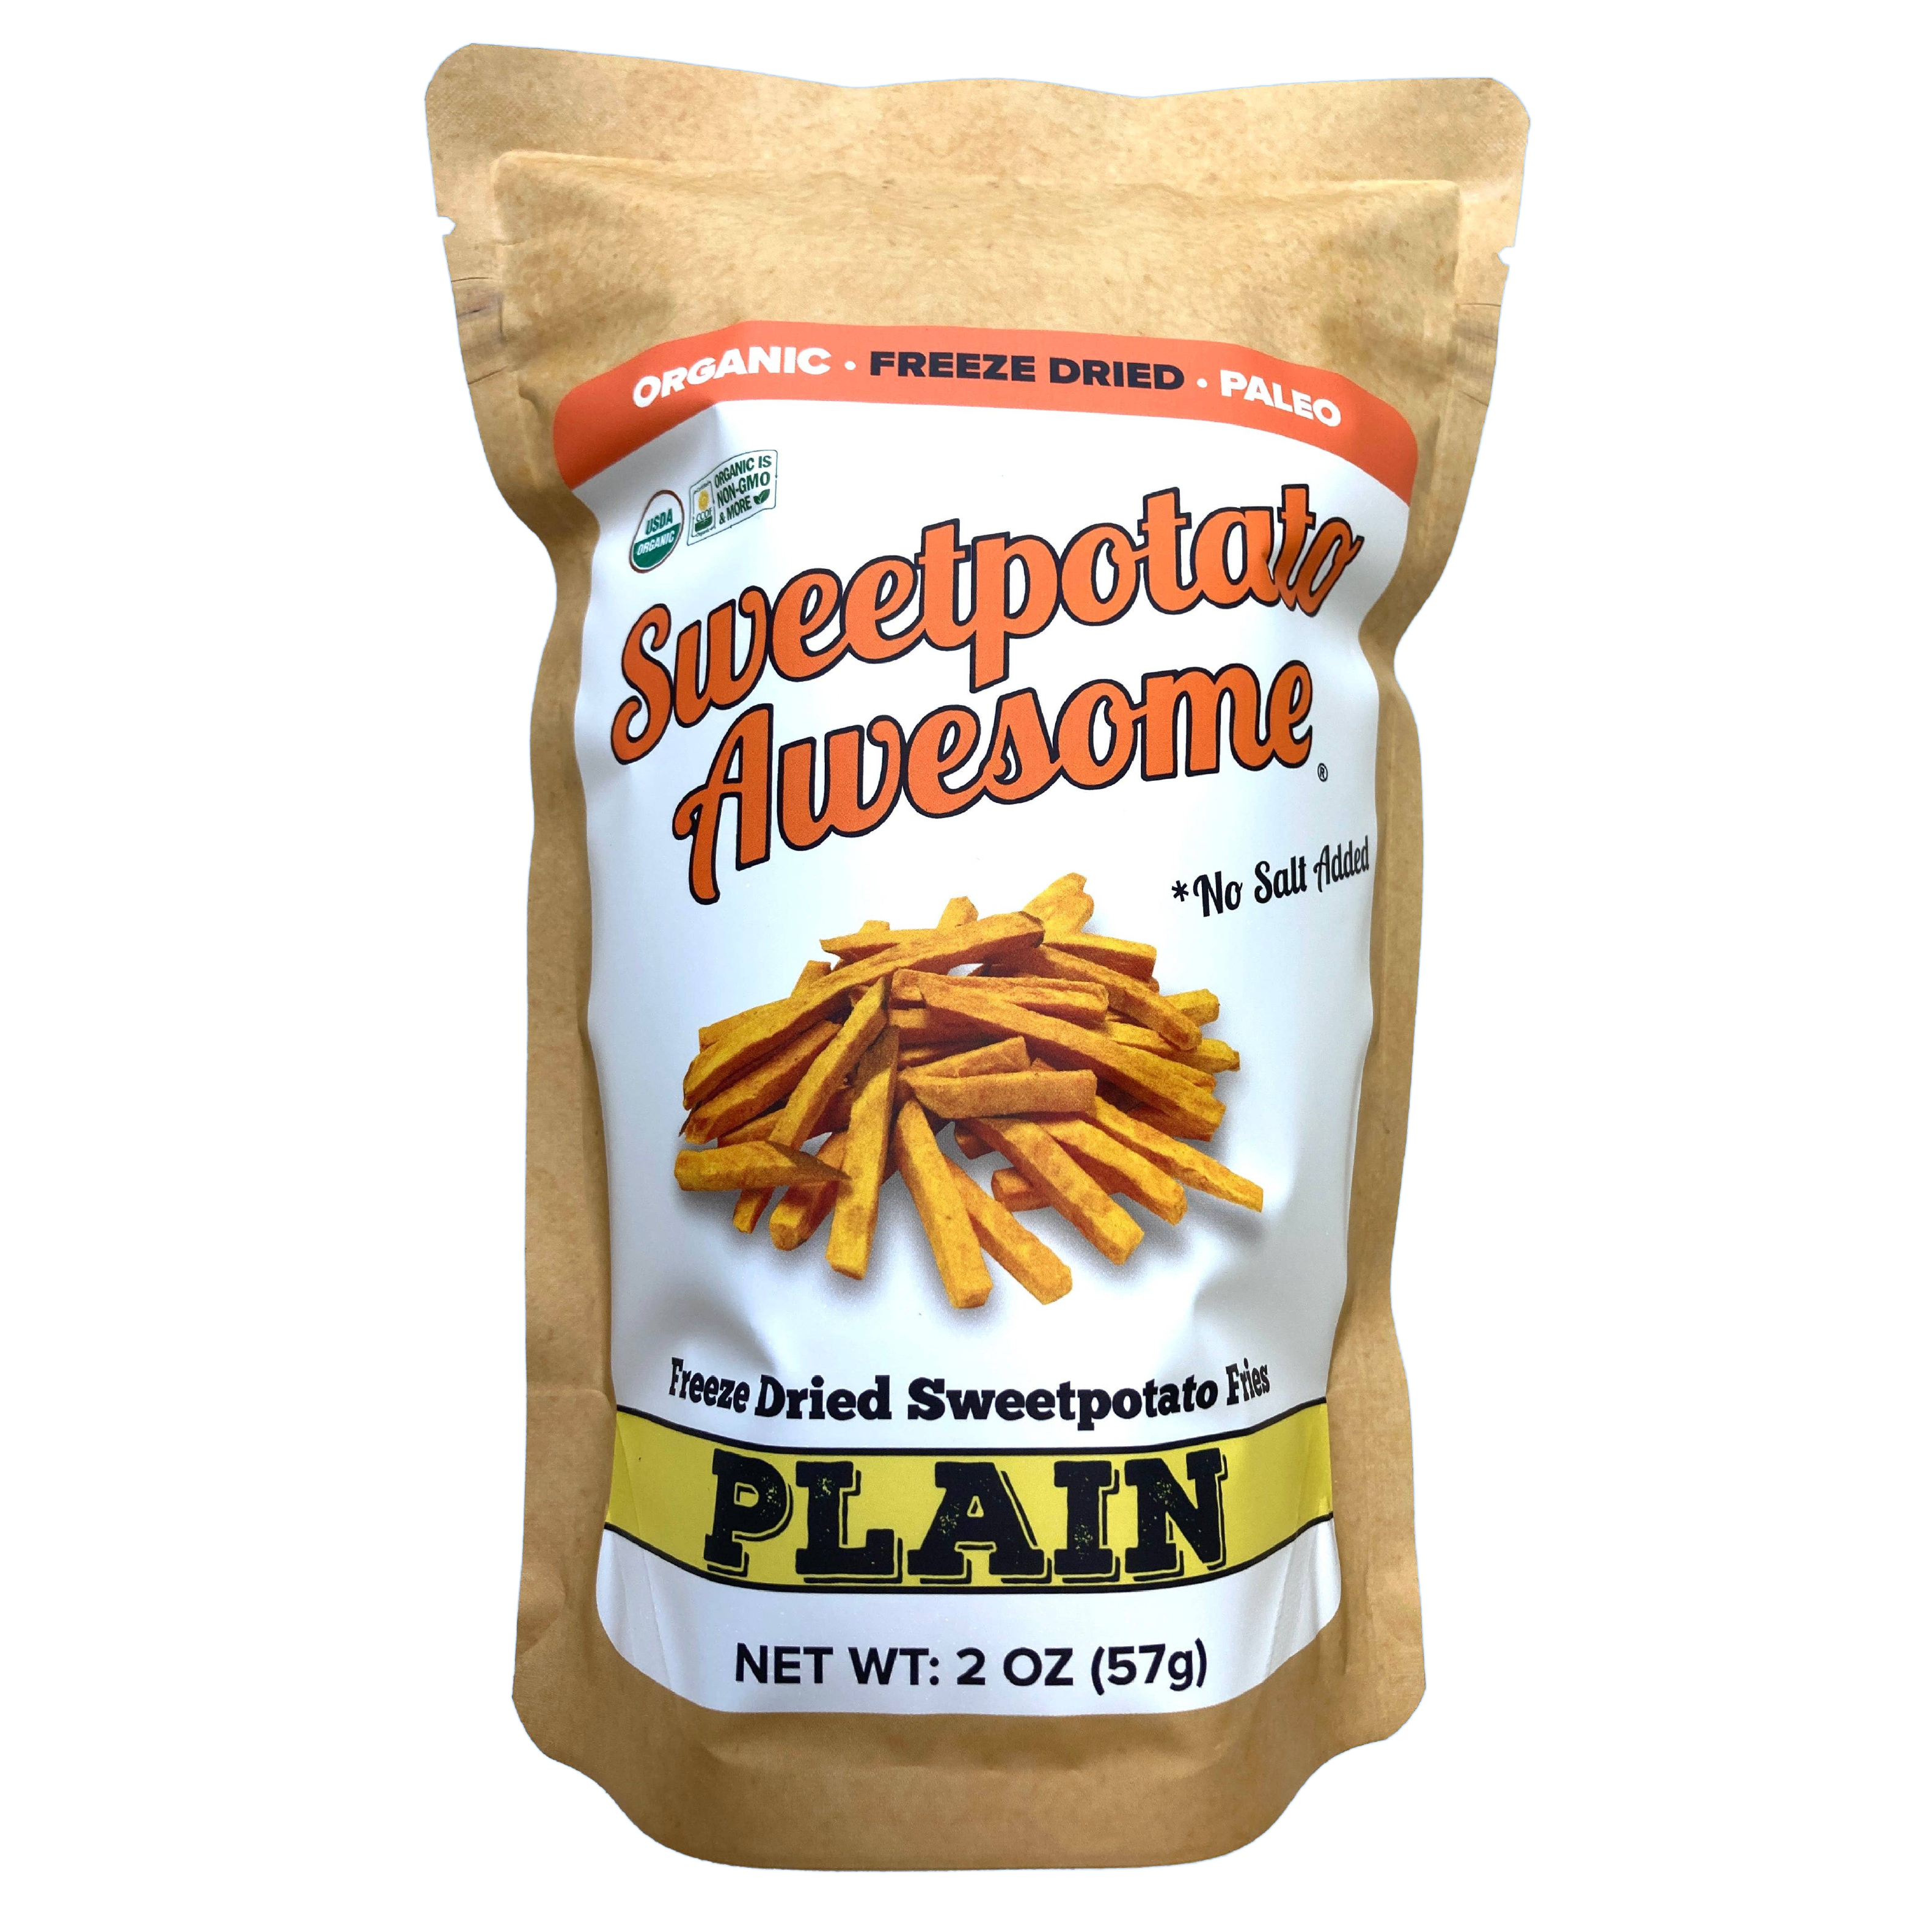 Sweetpotato Awesome Plain (No Salt) Sweet Potato Fries (2 oz.)